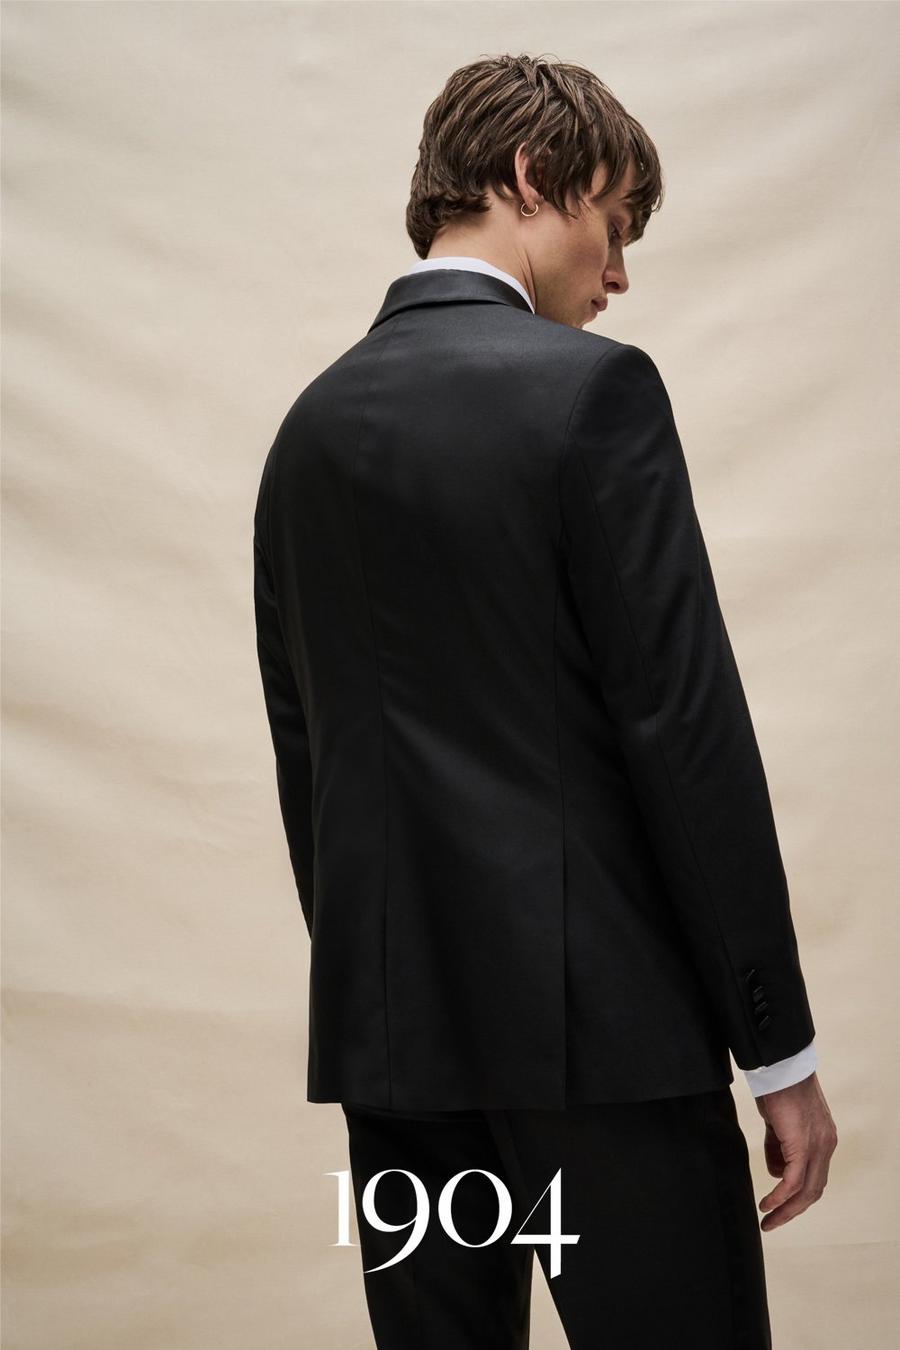 194 Tailored Fit Black Premium Tux Suit Trousers